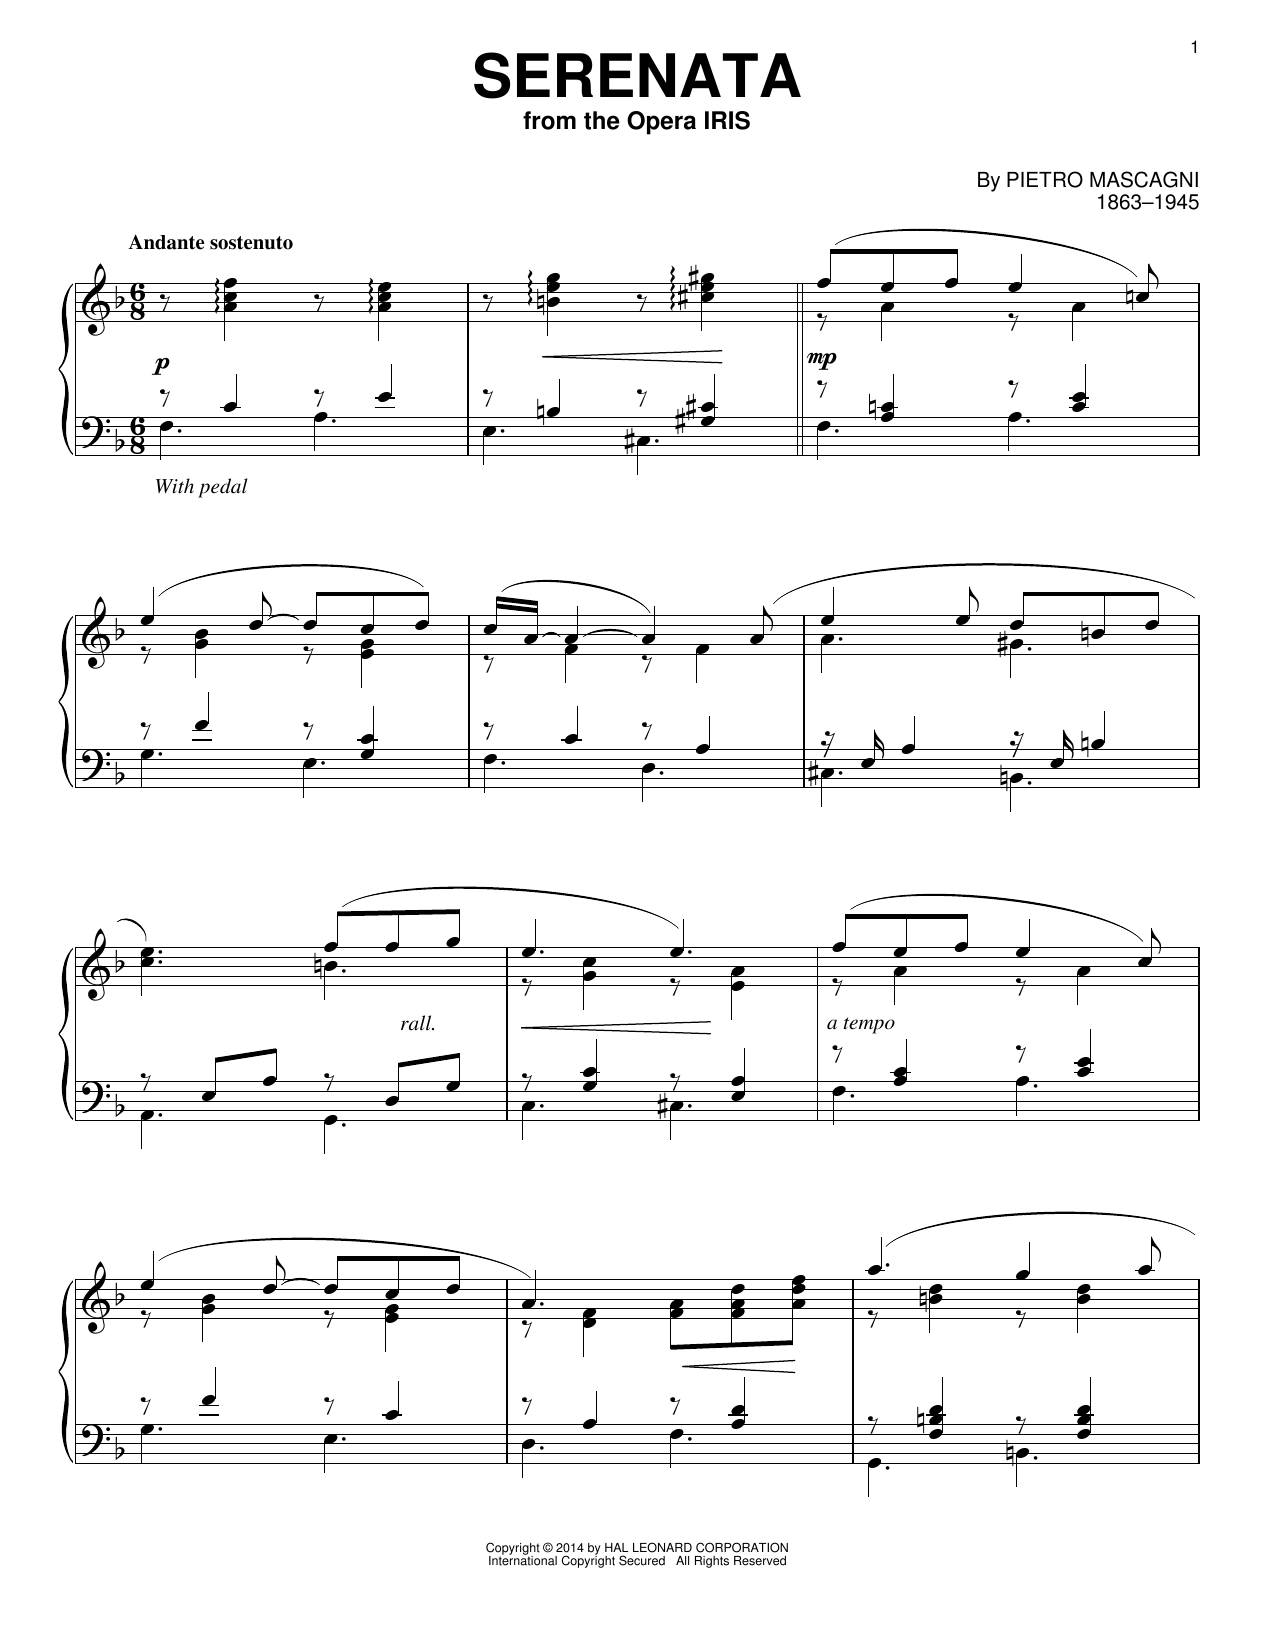 Pietro Mascagni Serenata Sheet Music Notes & Chords for Piano - Download or Print PDF